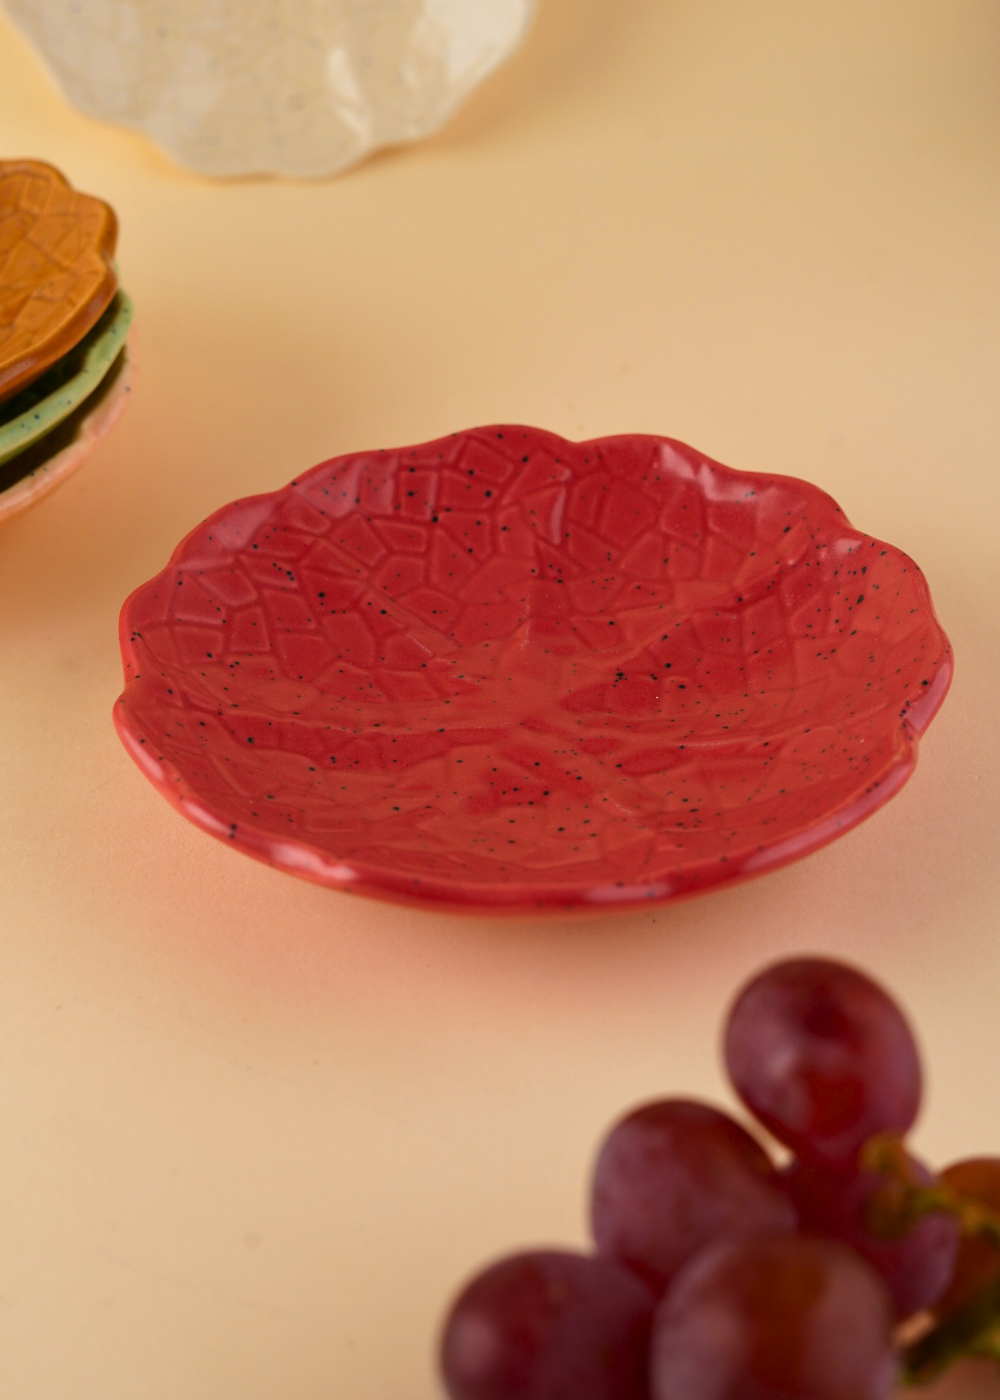 red cabbage handmade dessert plate made by ceramic